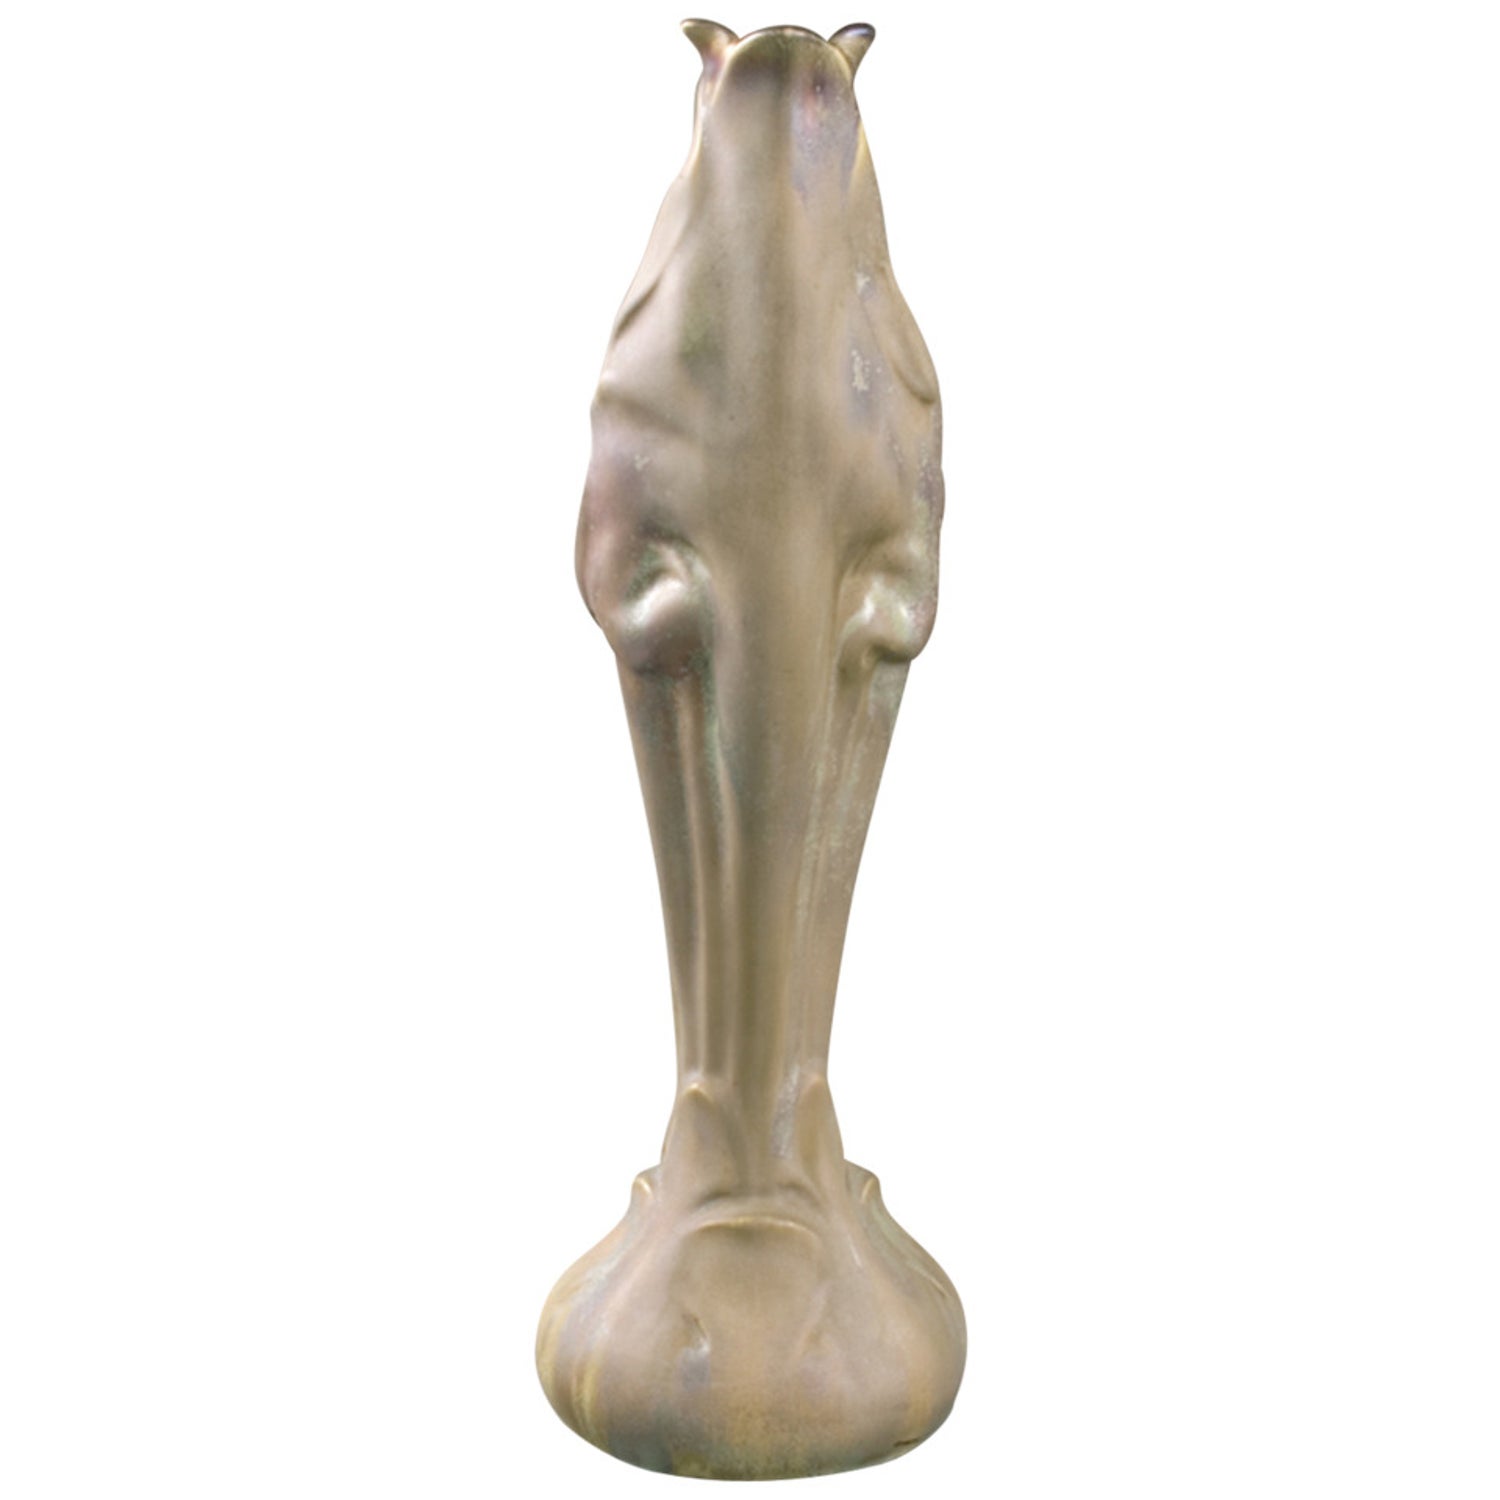 Bussière French Art Nouveau Ceramic Vase For Sale at 1stDibs